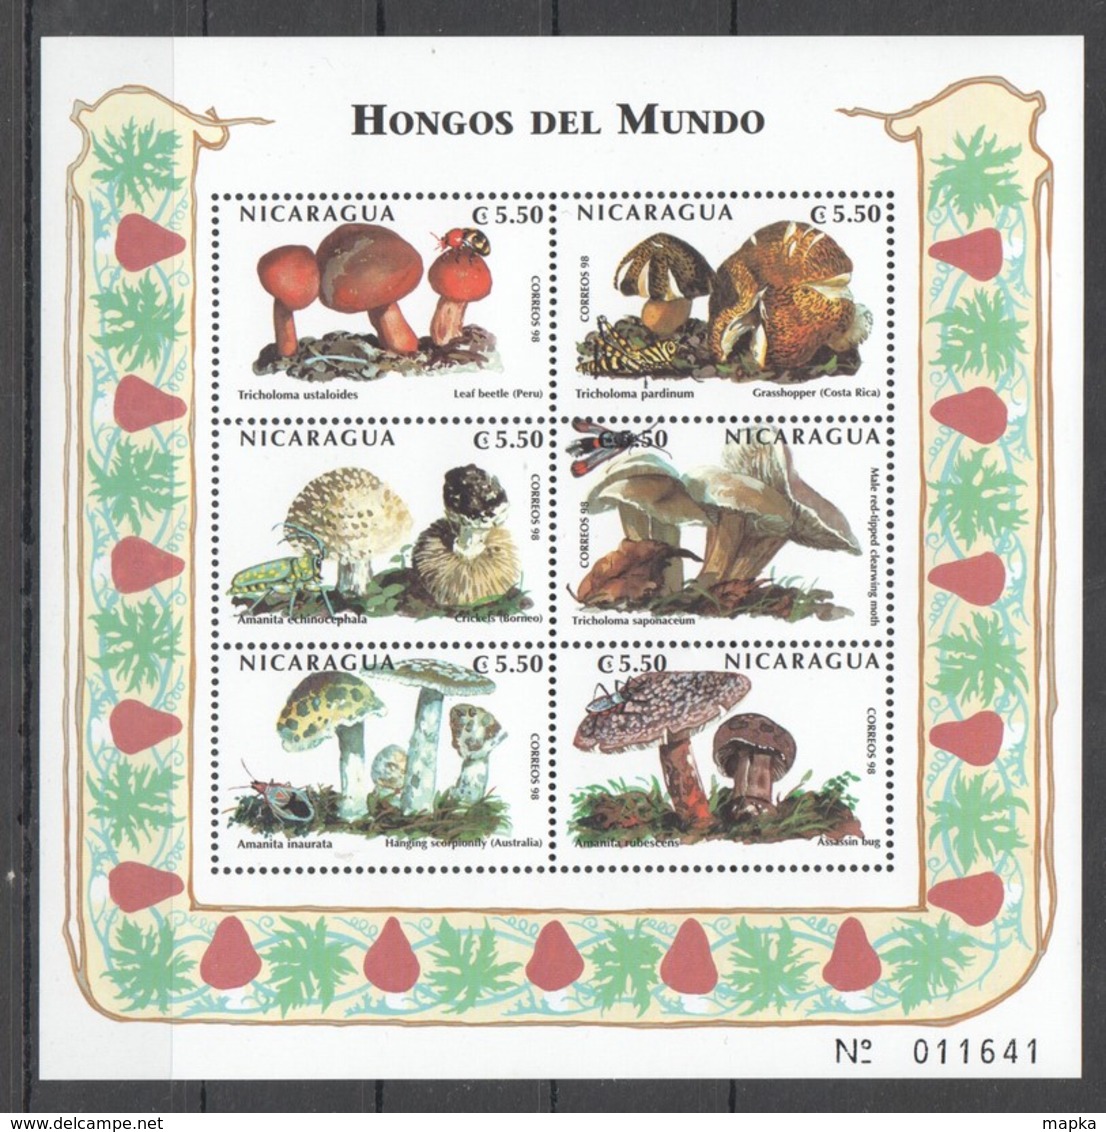 O1202 1998 NICARAGUA FLORA NATURE MUSHROOMS HONGOS DEL MUNDO 1KB MNH - Funghi